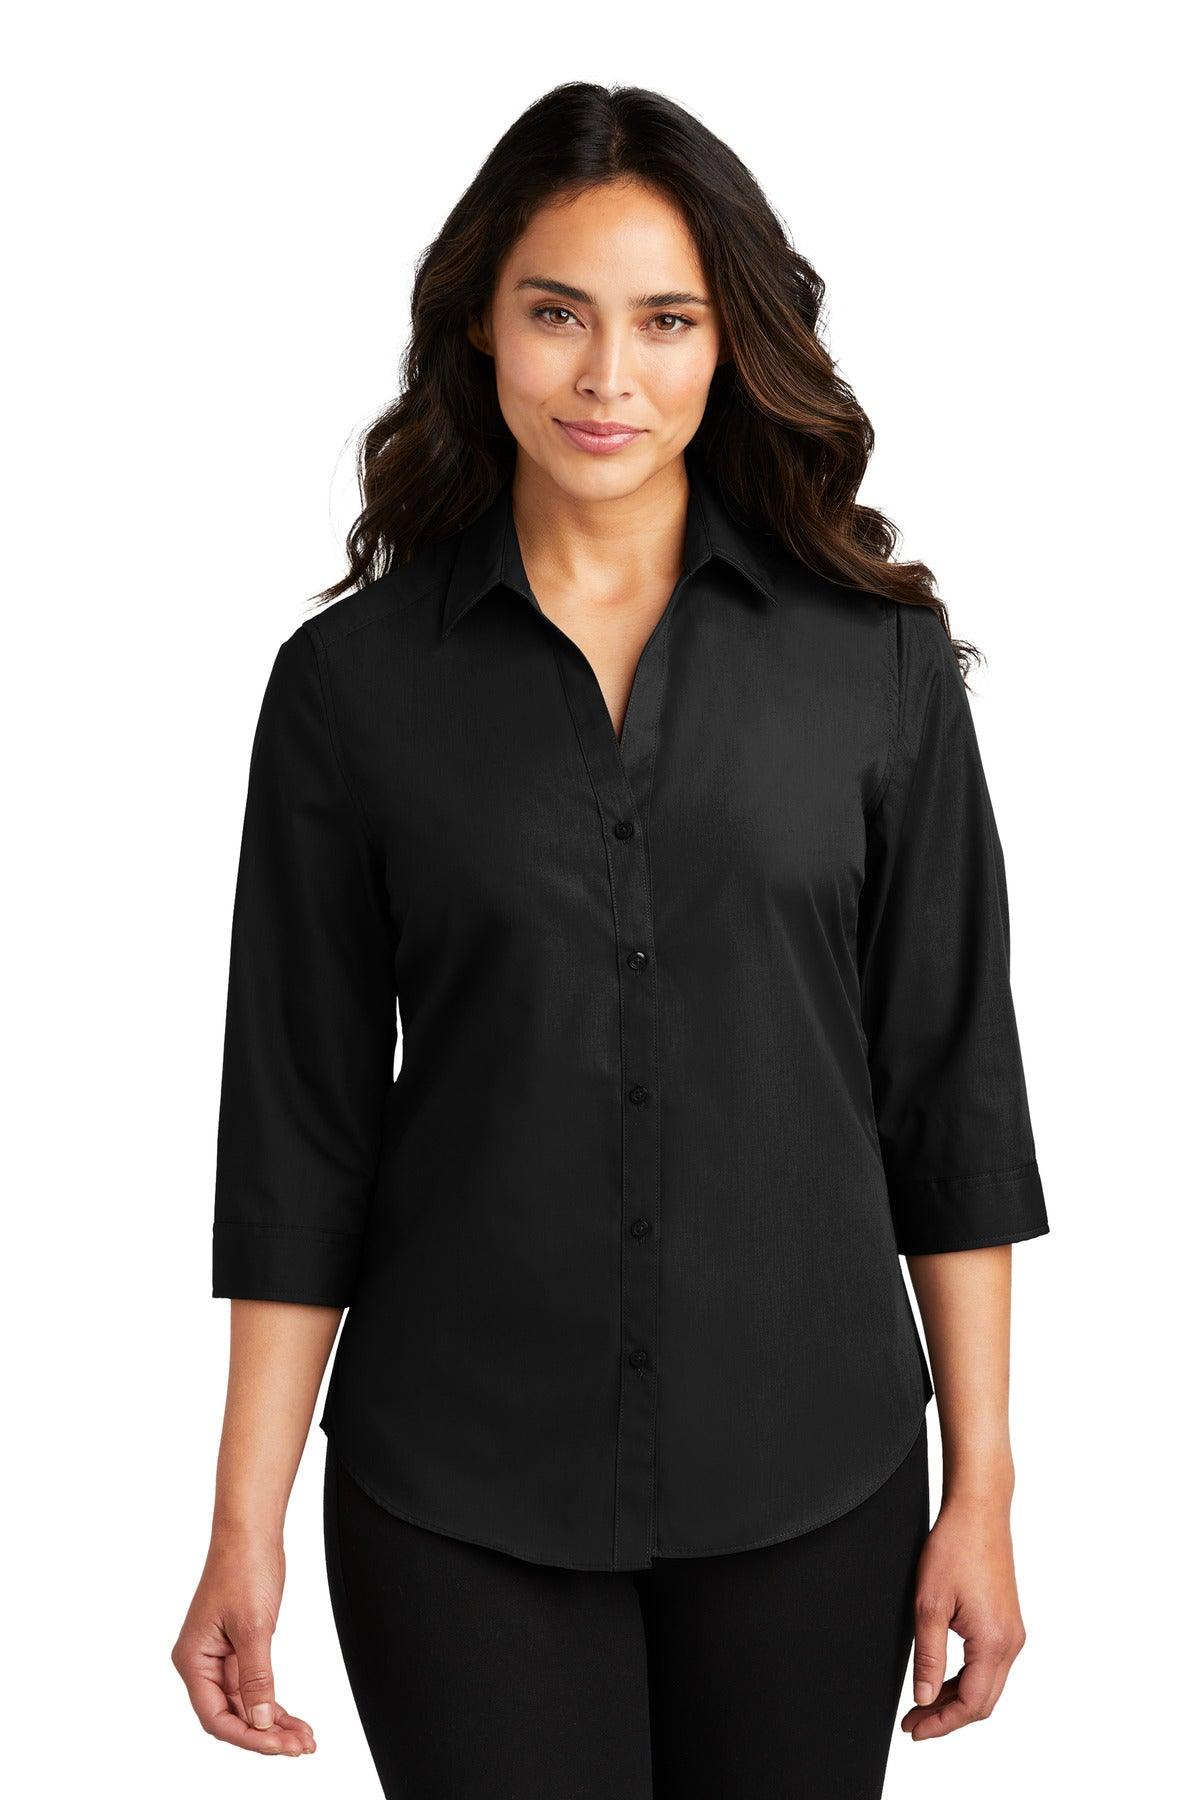 Port Authority Ladies 3/4-Sleeve Carefree Poplin Shirt. LW102 - Dresses Max